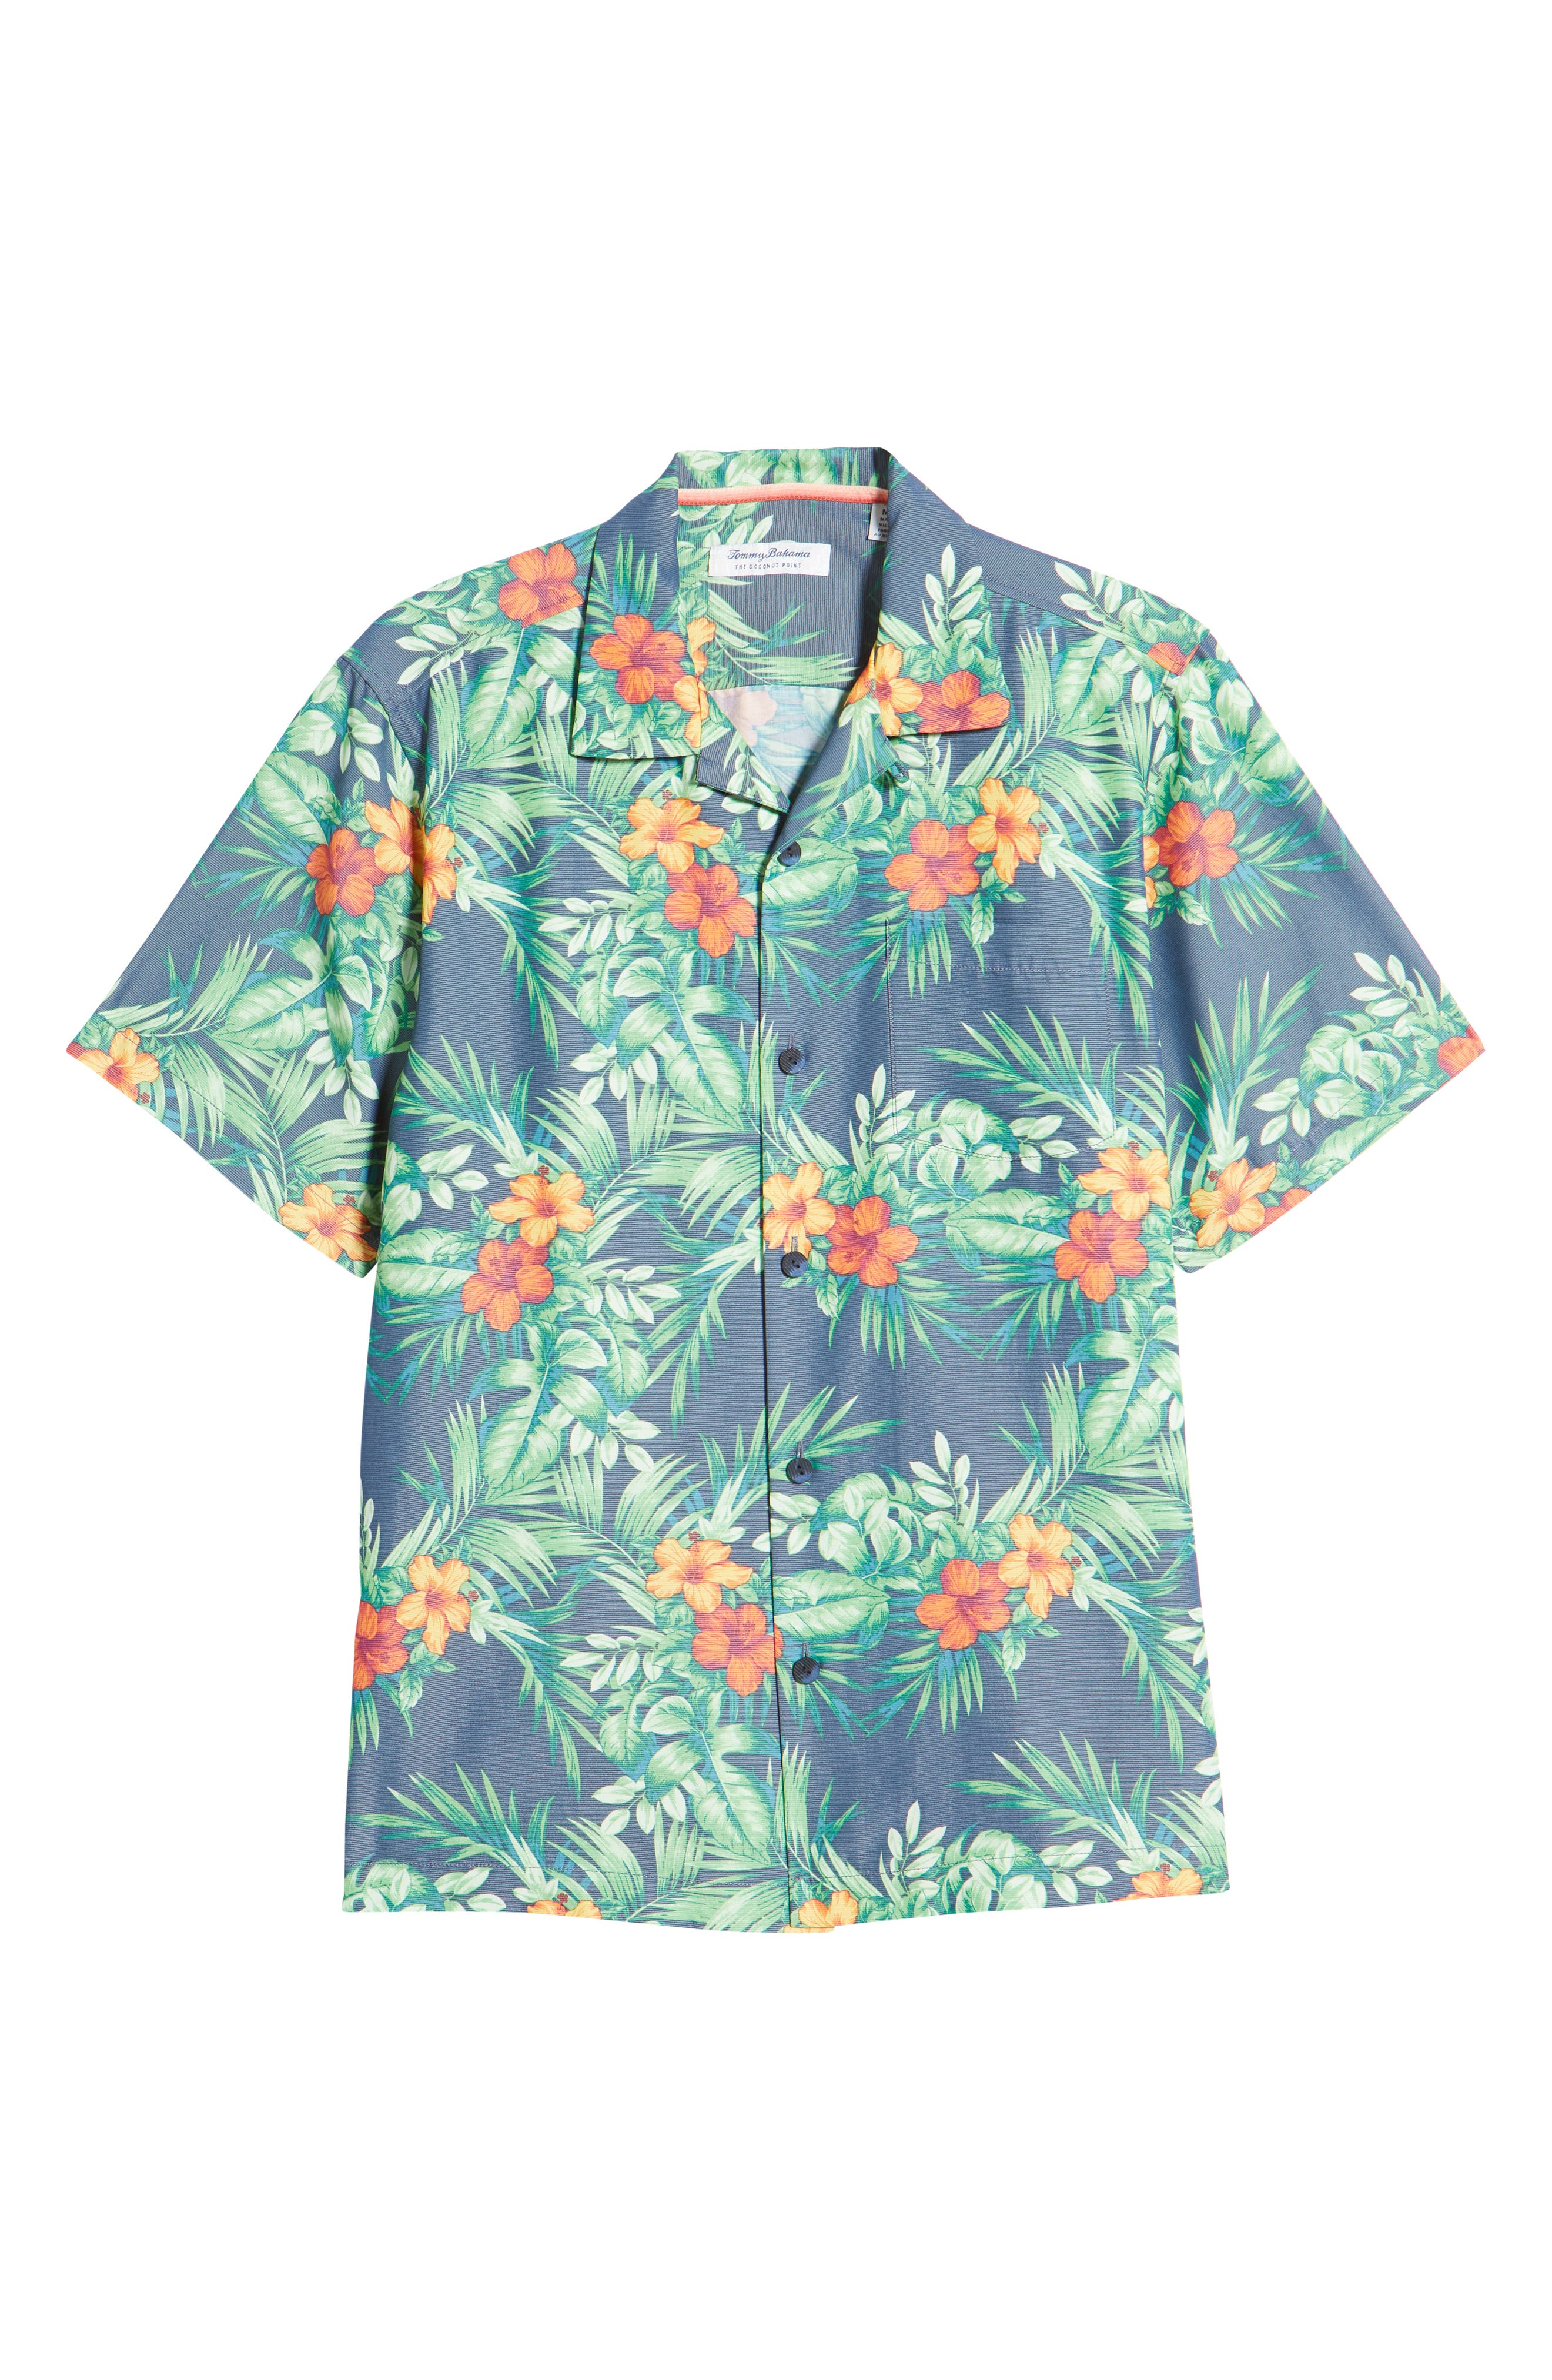 Tommy Bahama Bahama Coast Palm Tiles Short Sleeve Camp Shirt